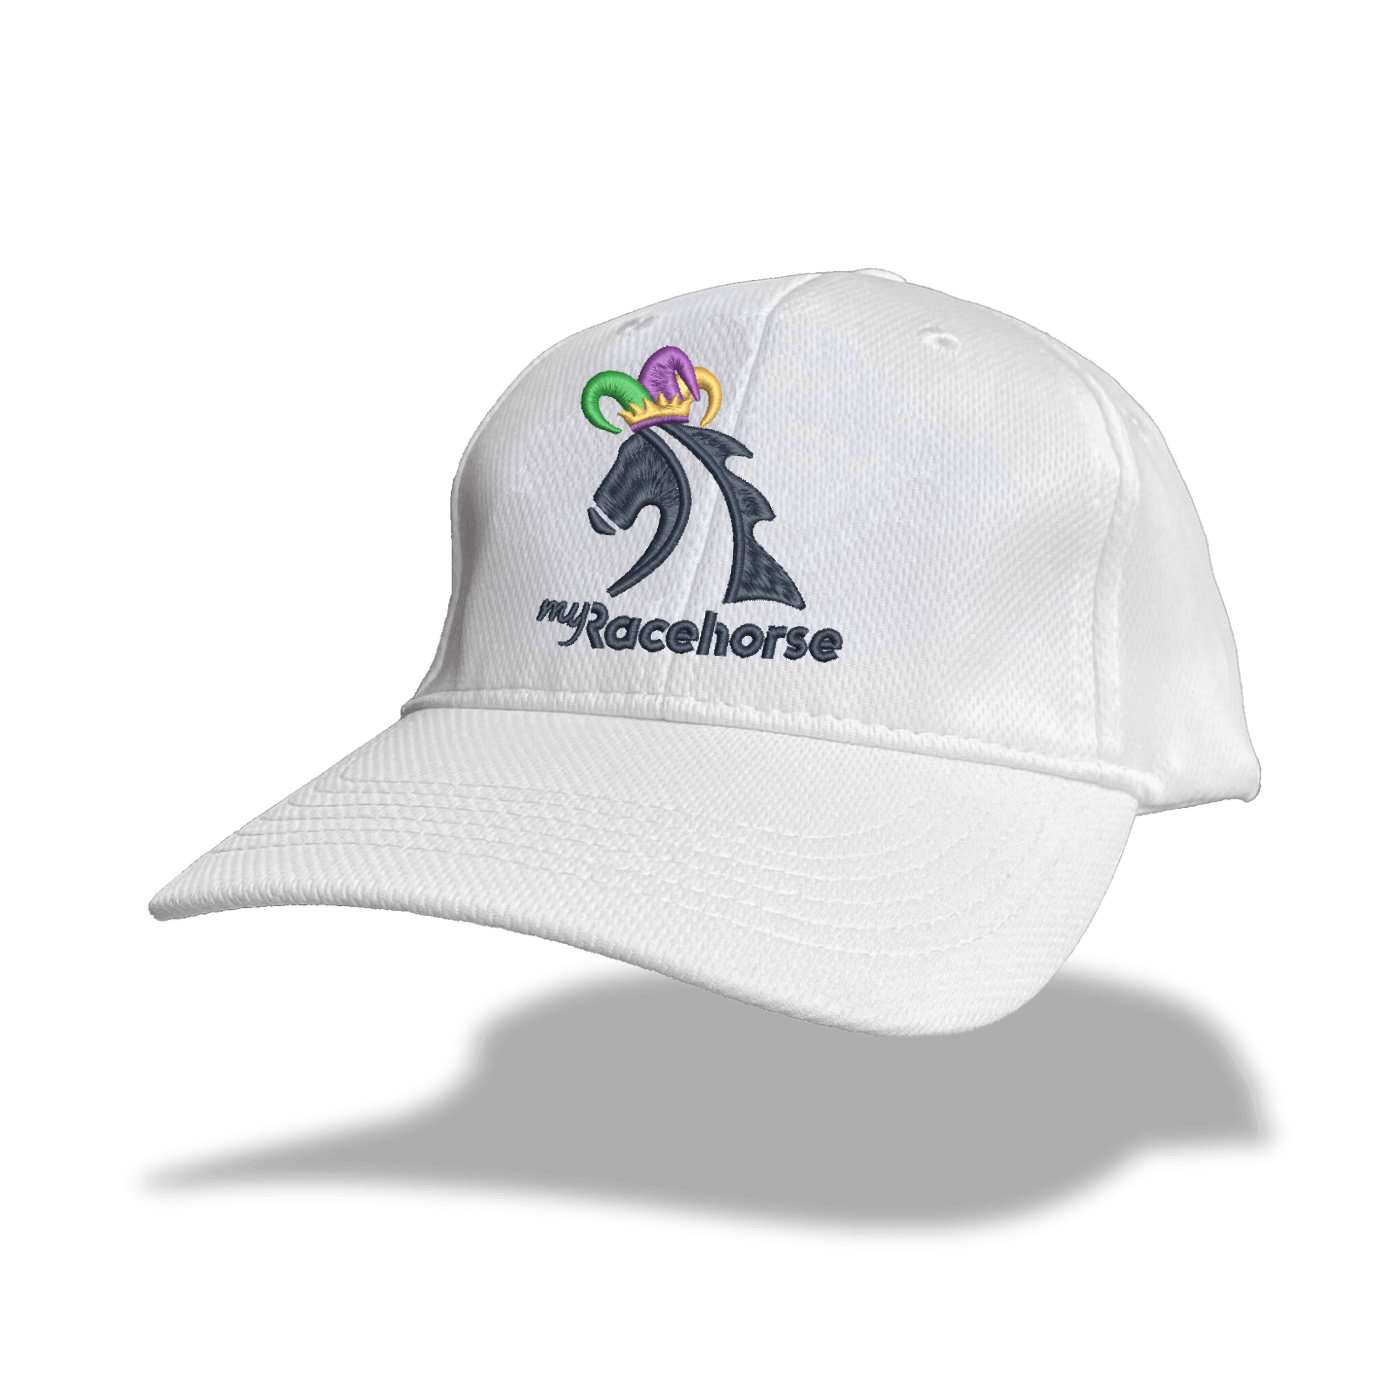 The MRH Mardi Gras Collection Velocity Perfomance Hat